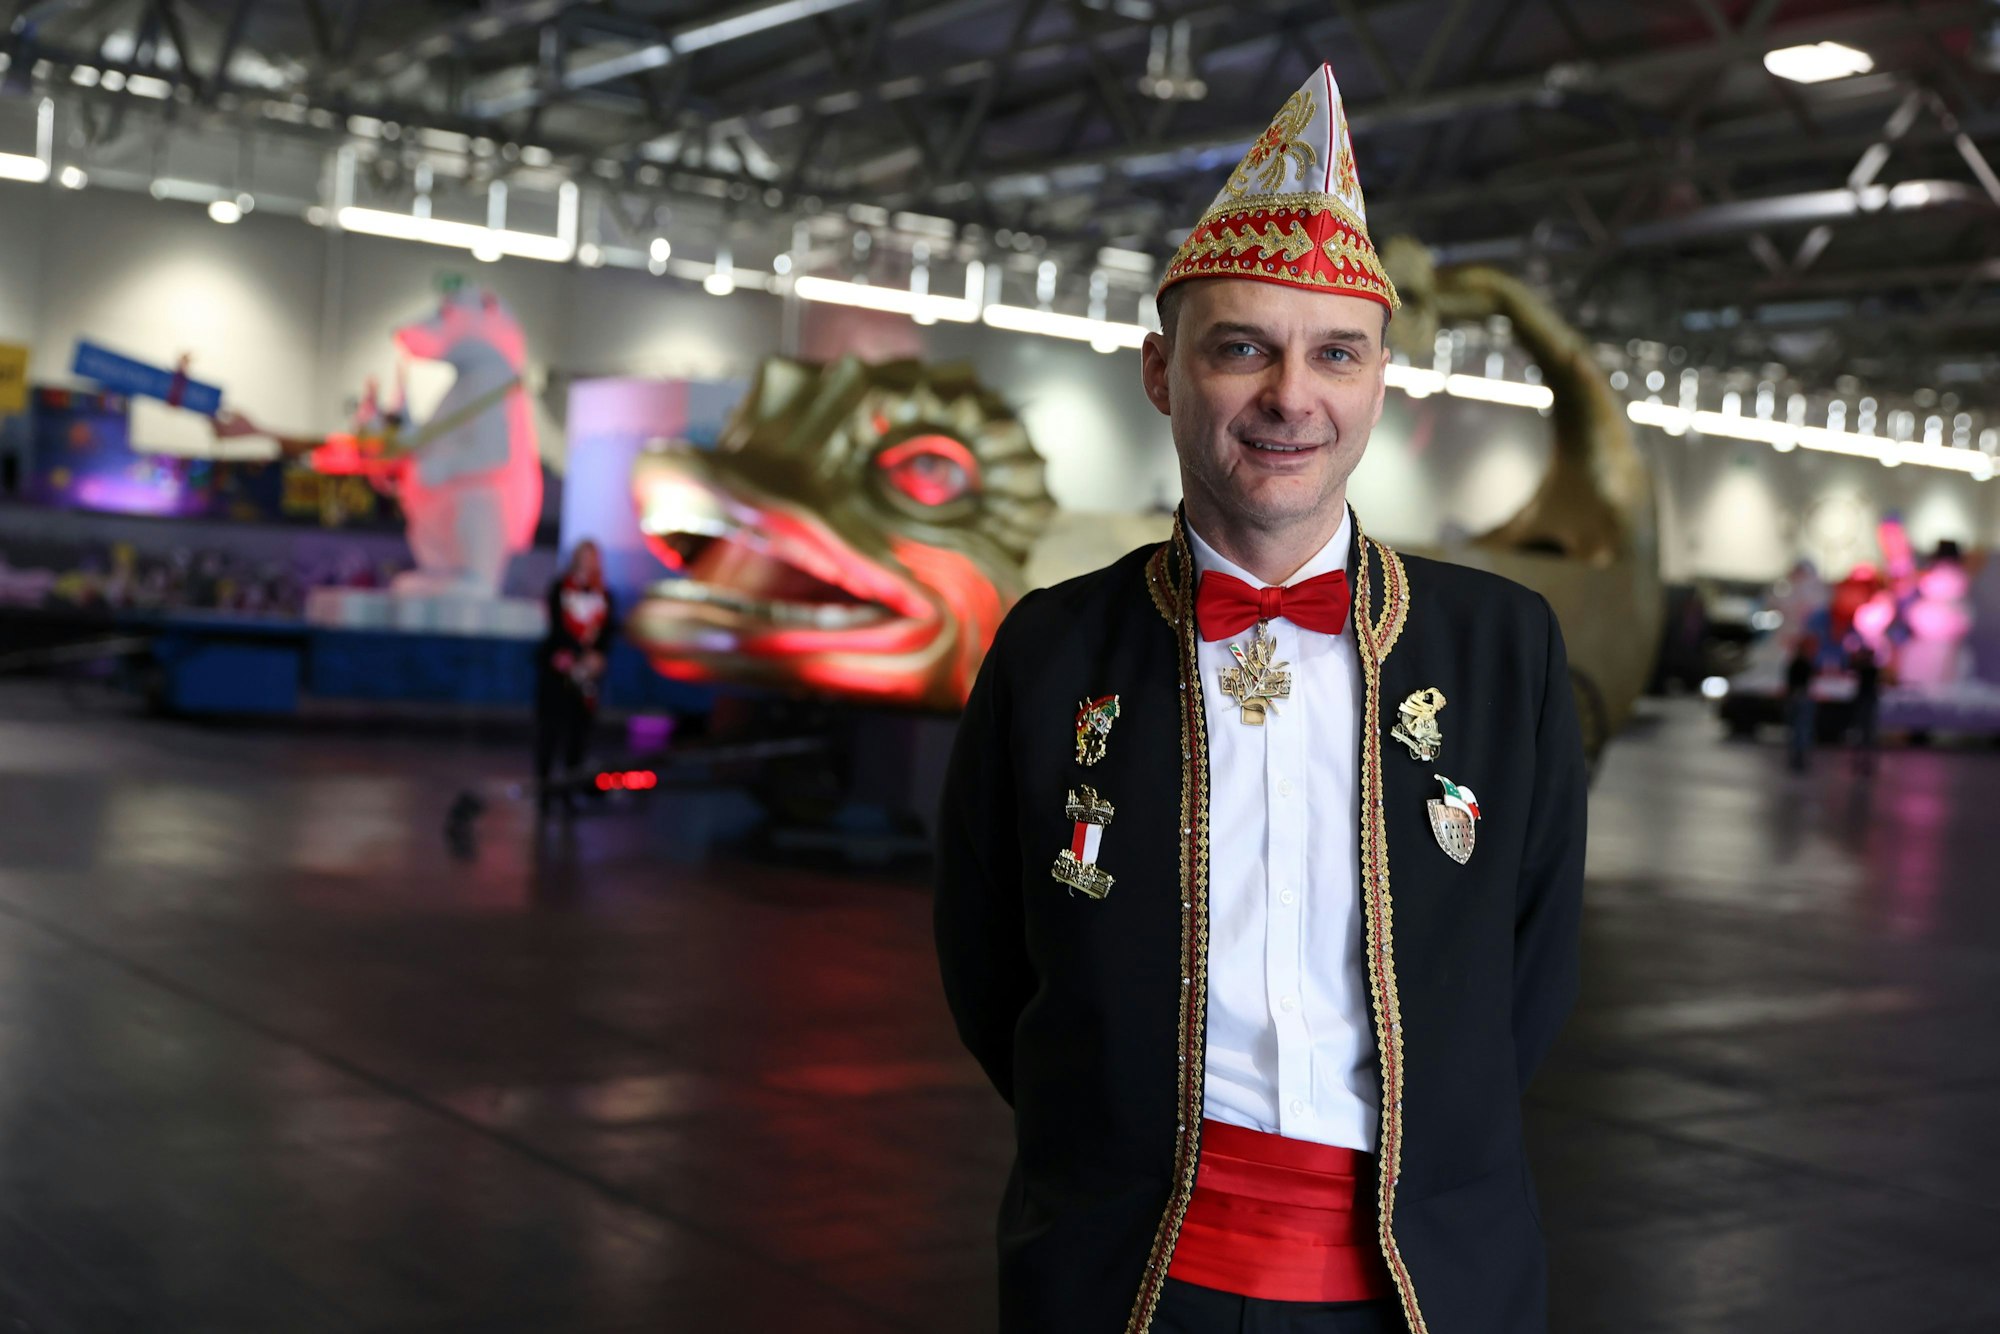 Holger Kirsch ist Leiter des Kölner Rosenmontagzuges

